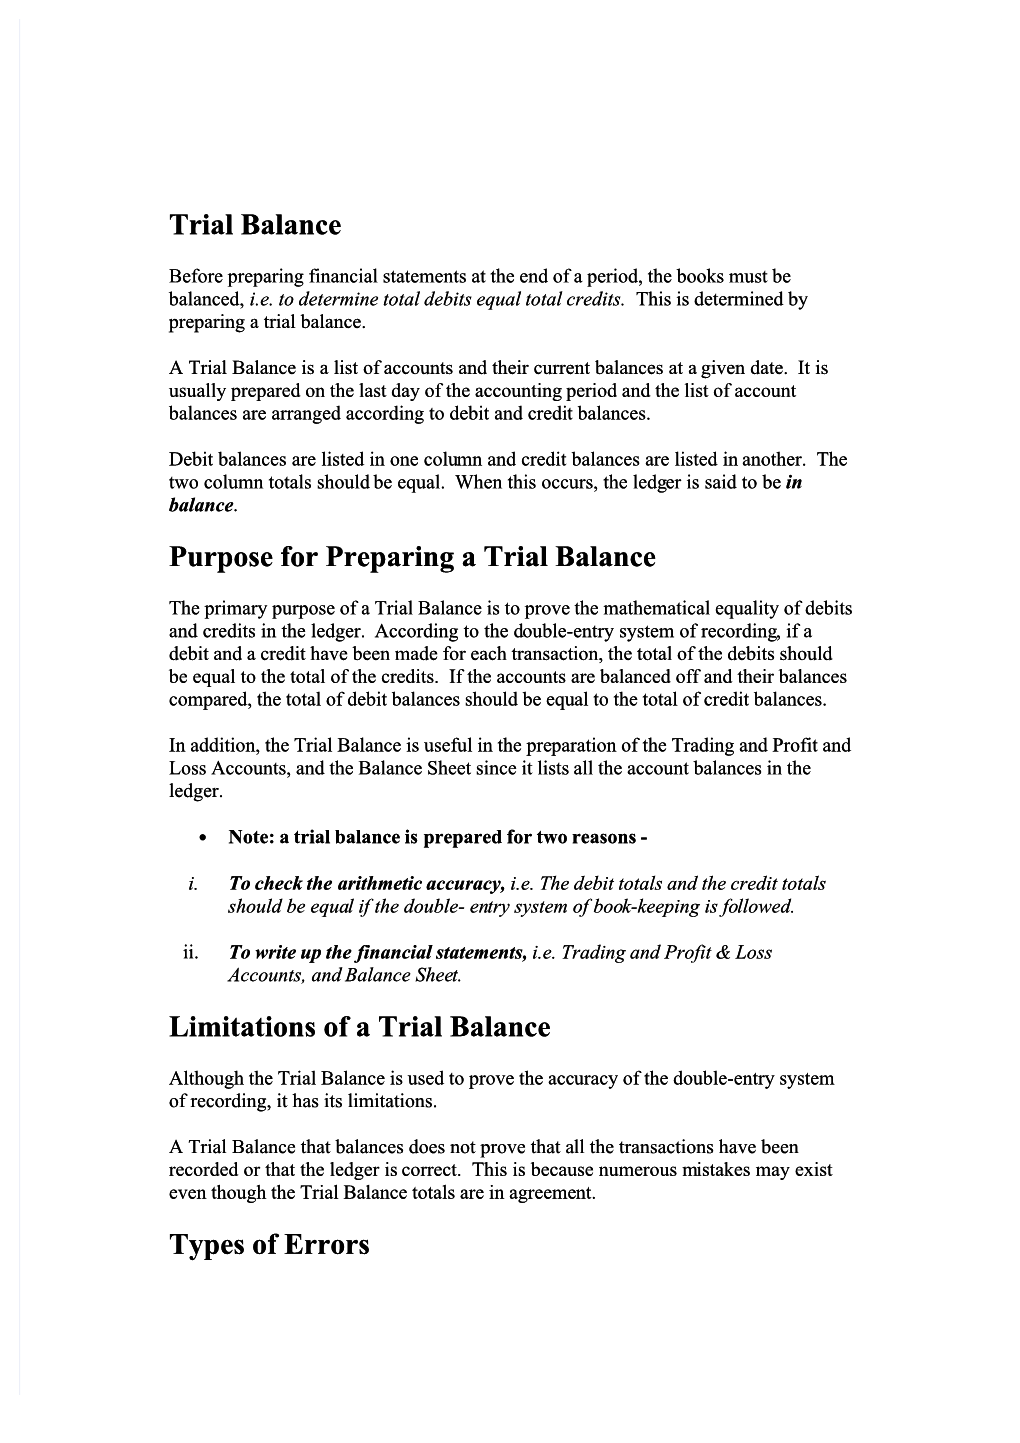 Trial Balance Purpose for Preparing a Trial Balance Limitations of a Trial Balance Types of Errors